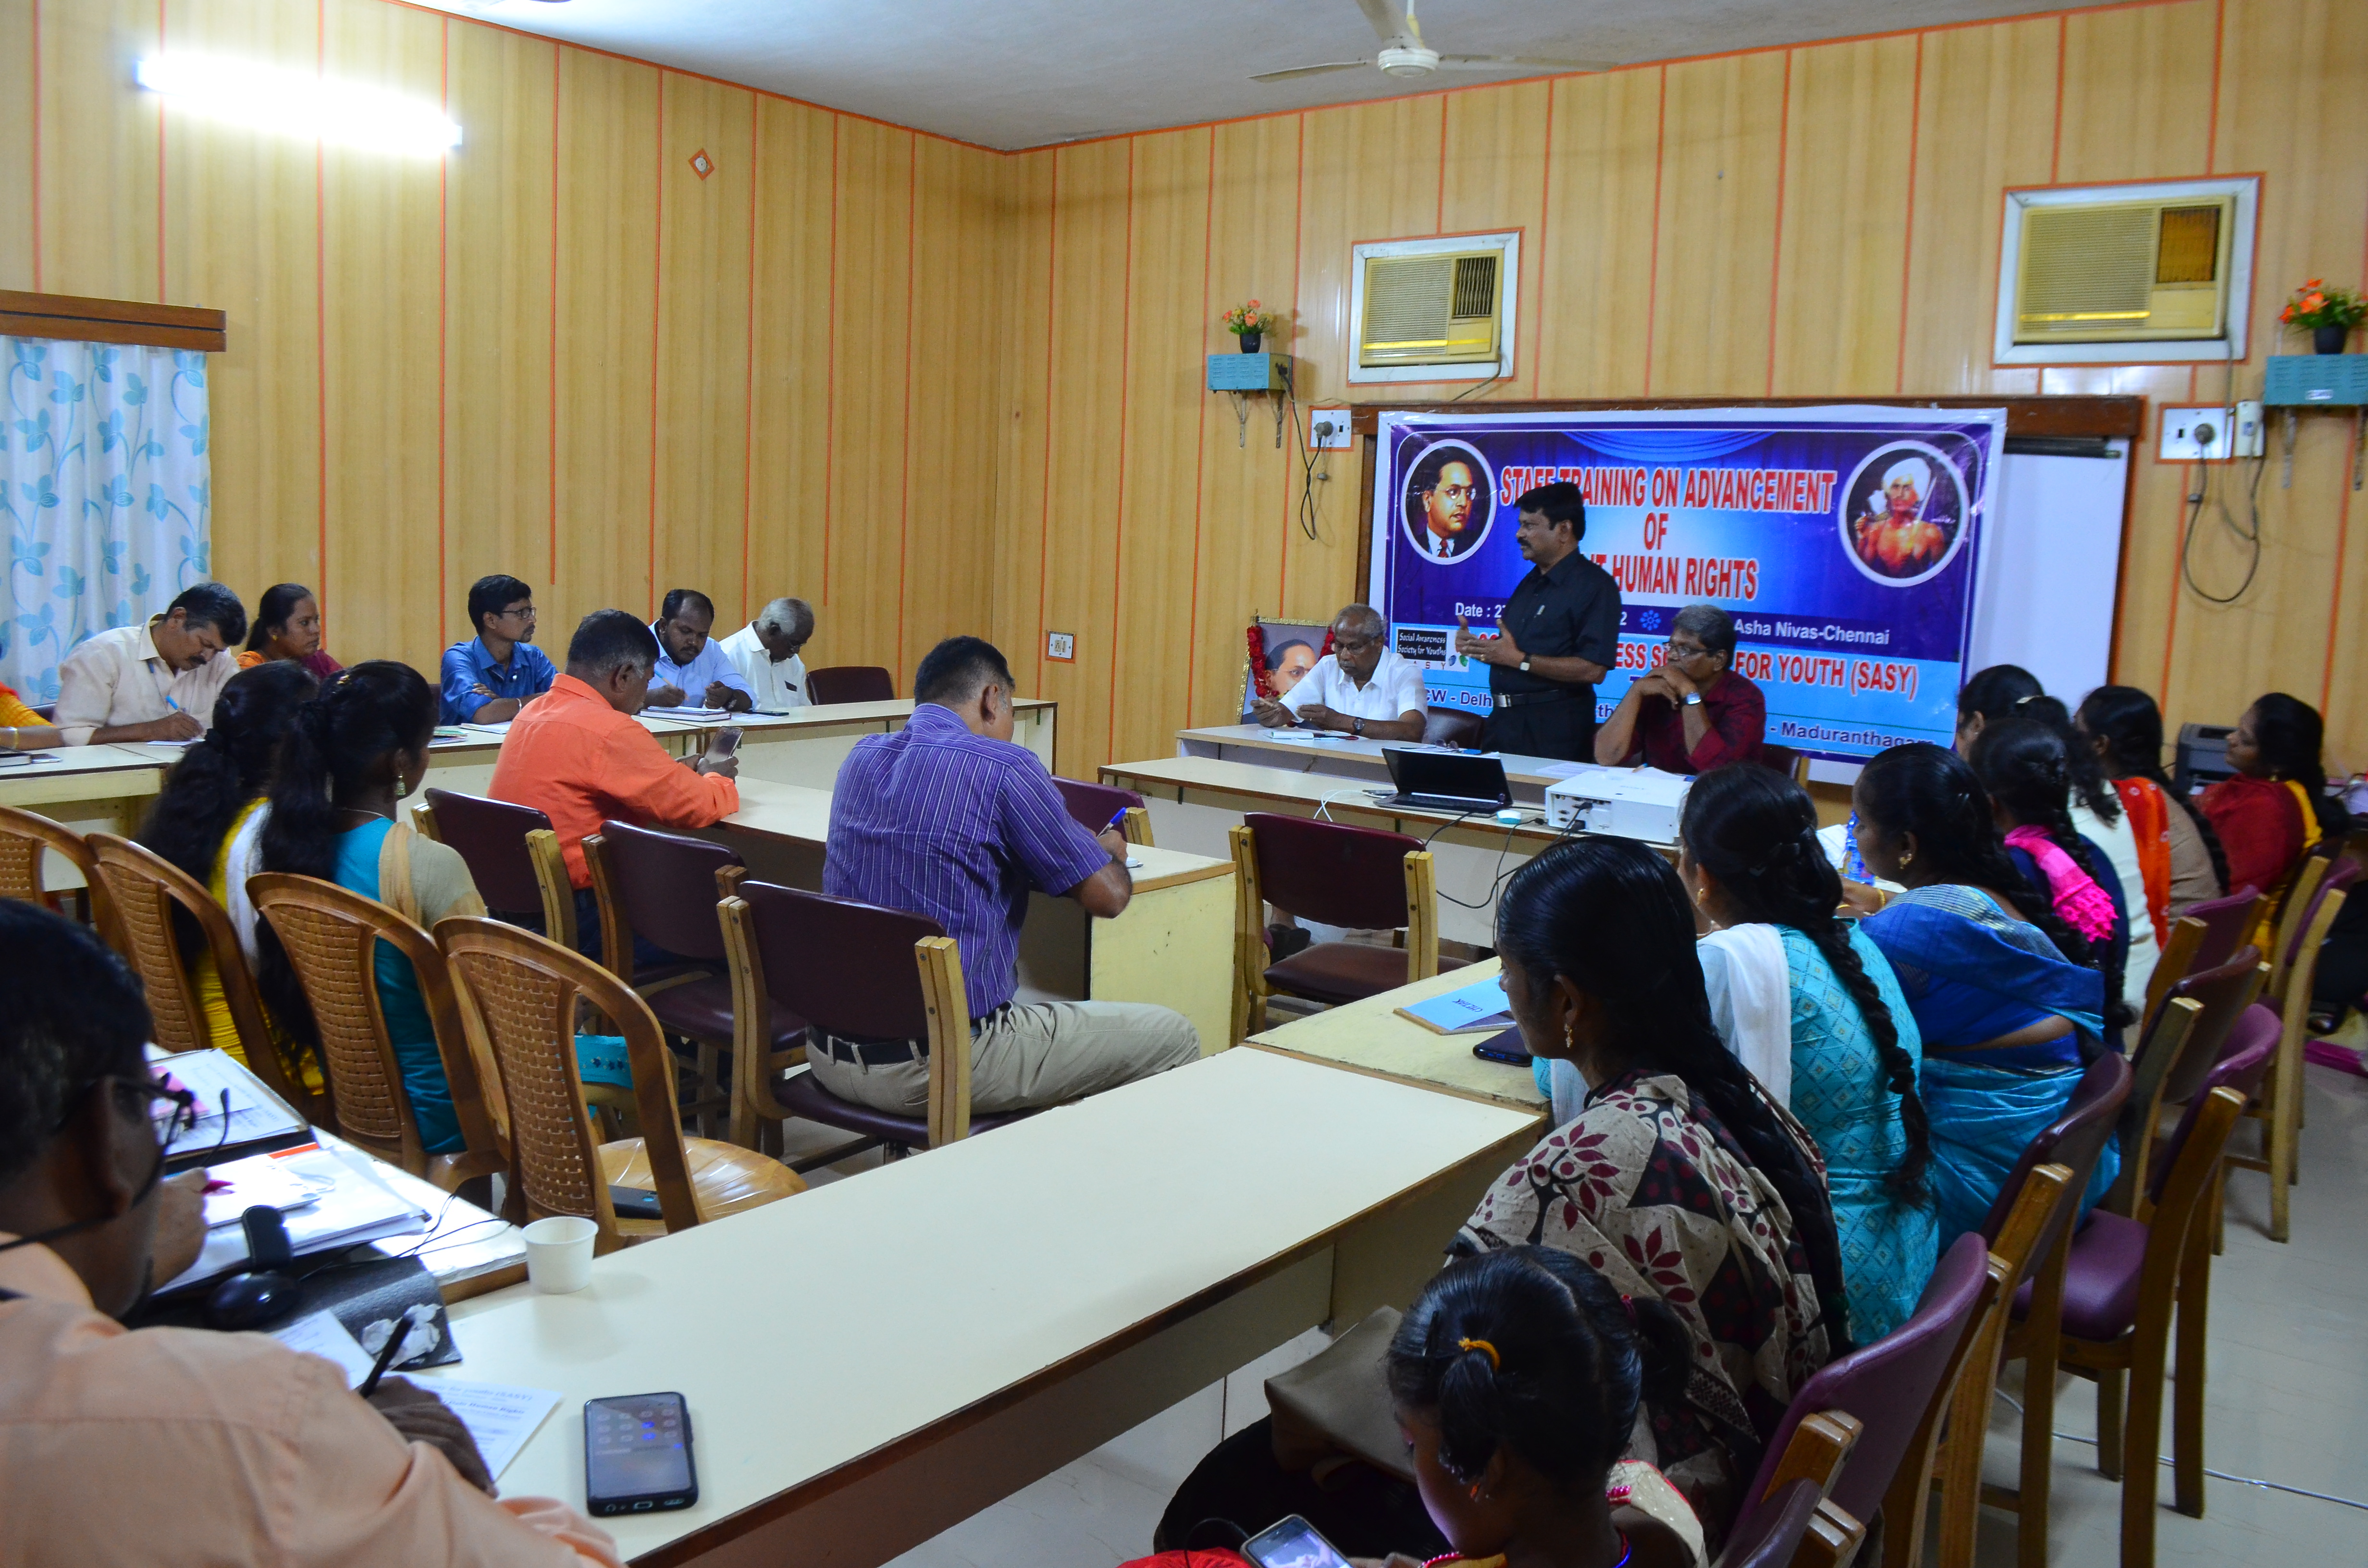 Staff Training on Advancement of Dalit Human Rights 